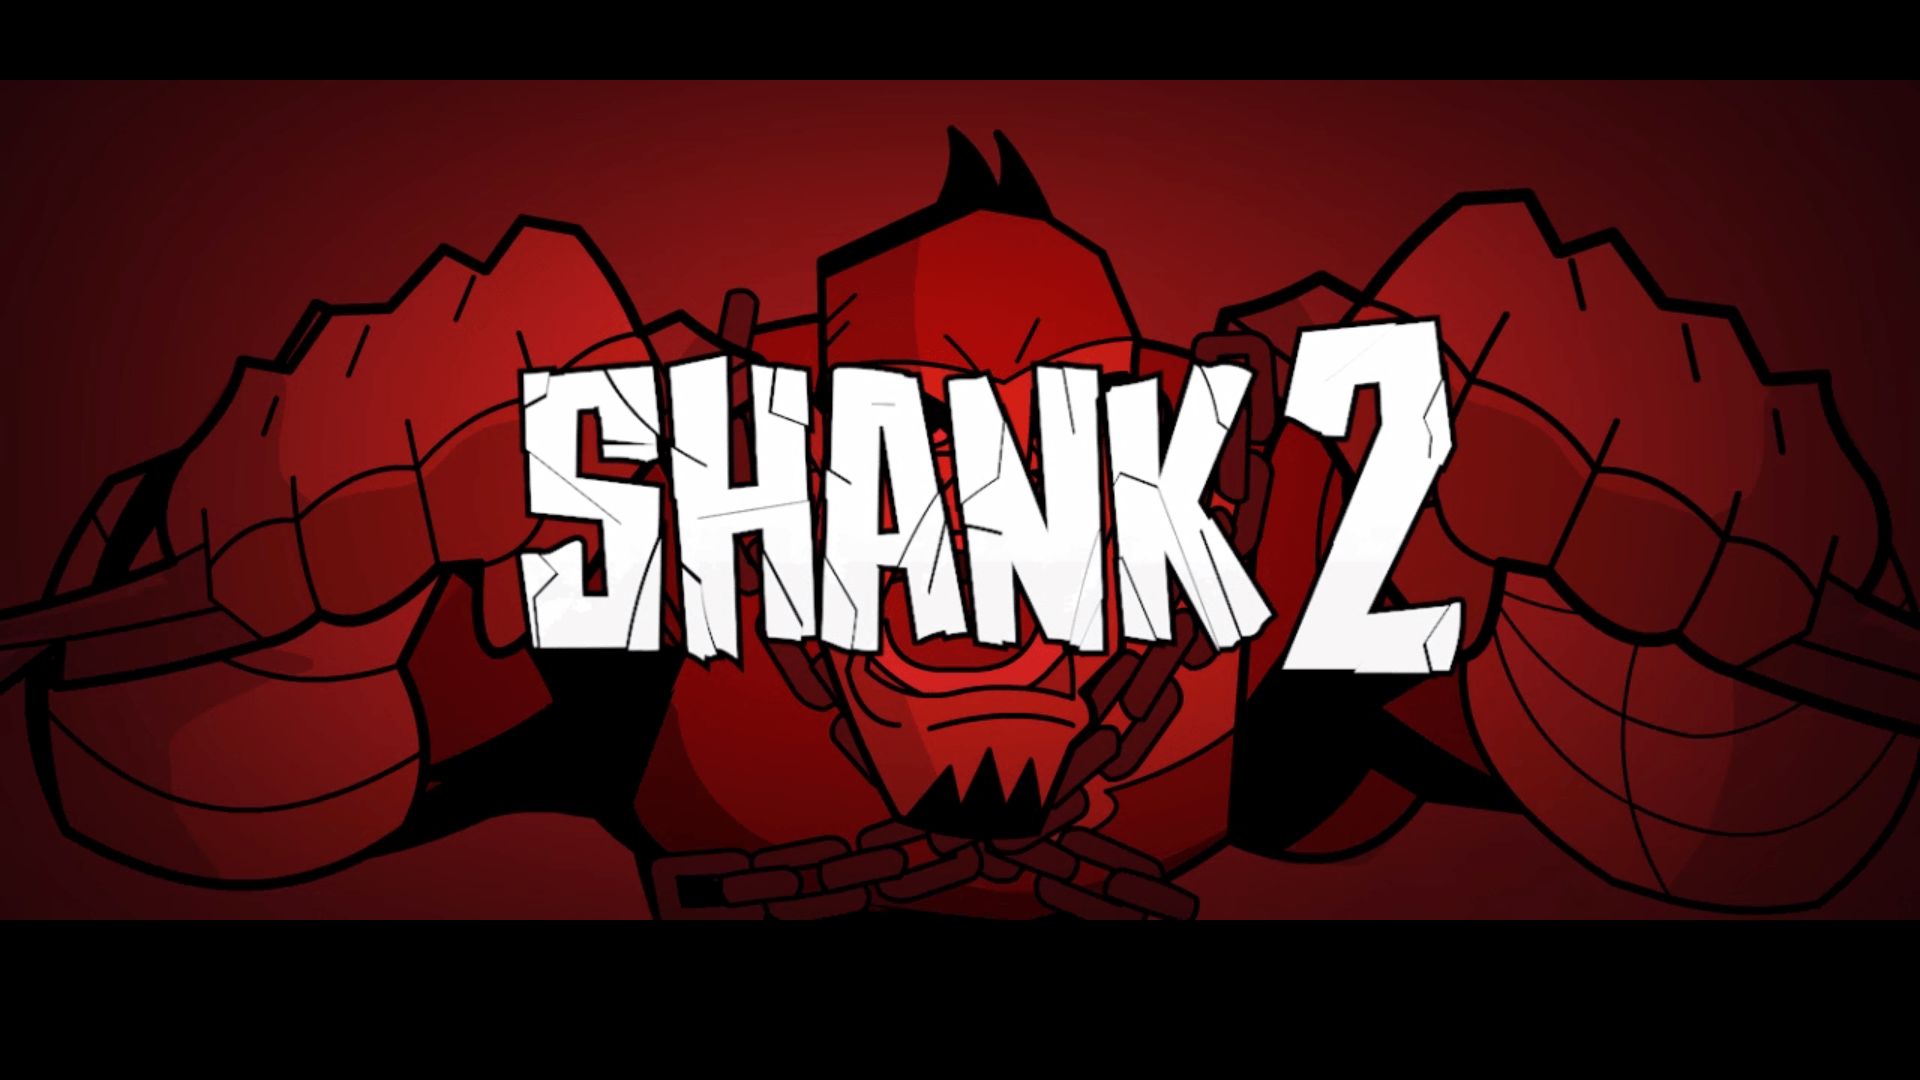 Shank Video Game Wallpaper High Quality